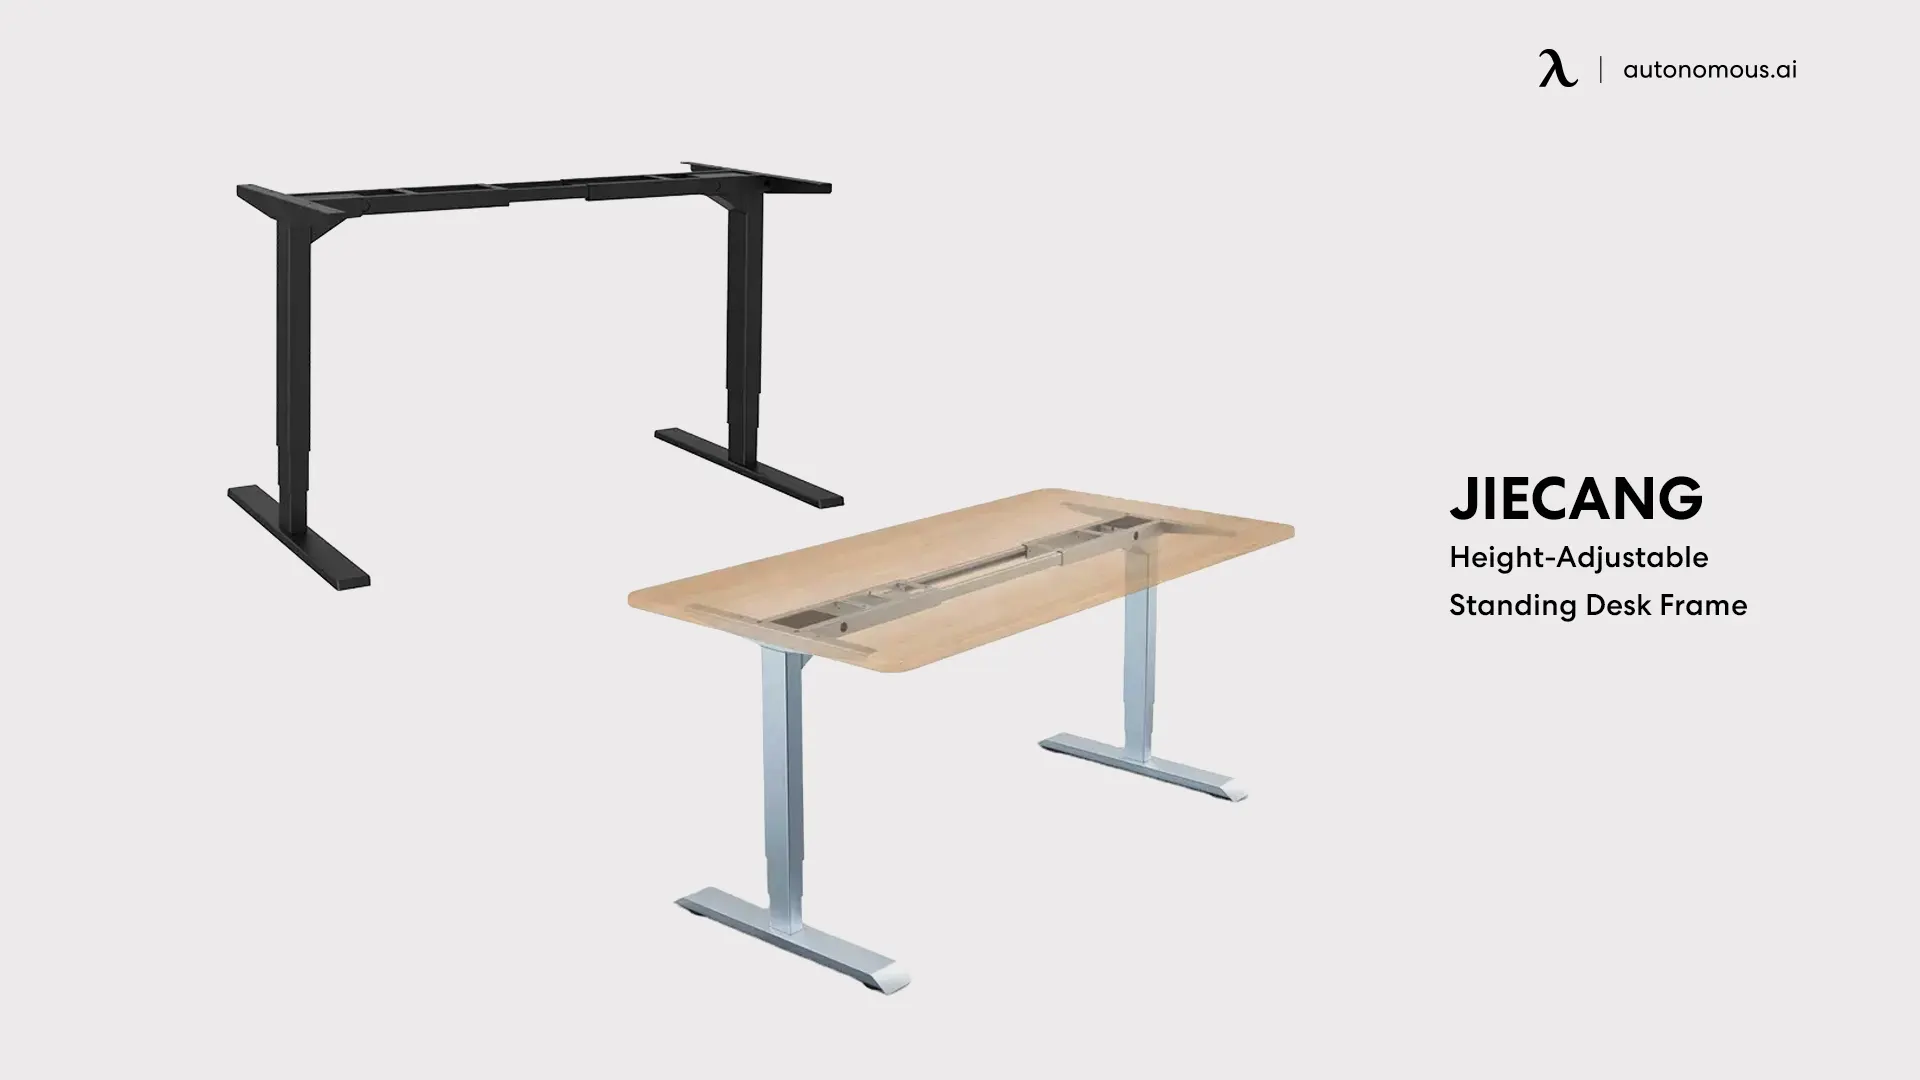 Jiecang Height-Adjustable Standing Desk Frame